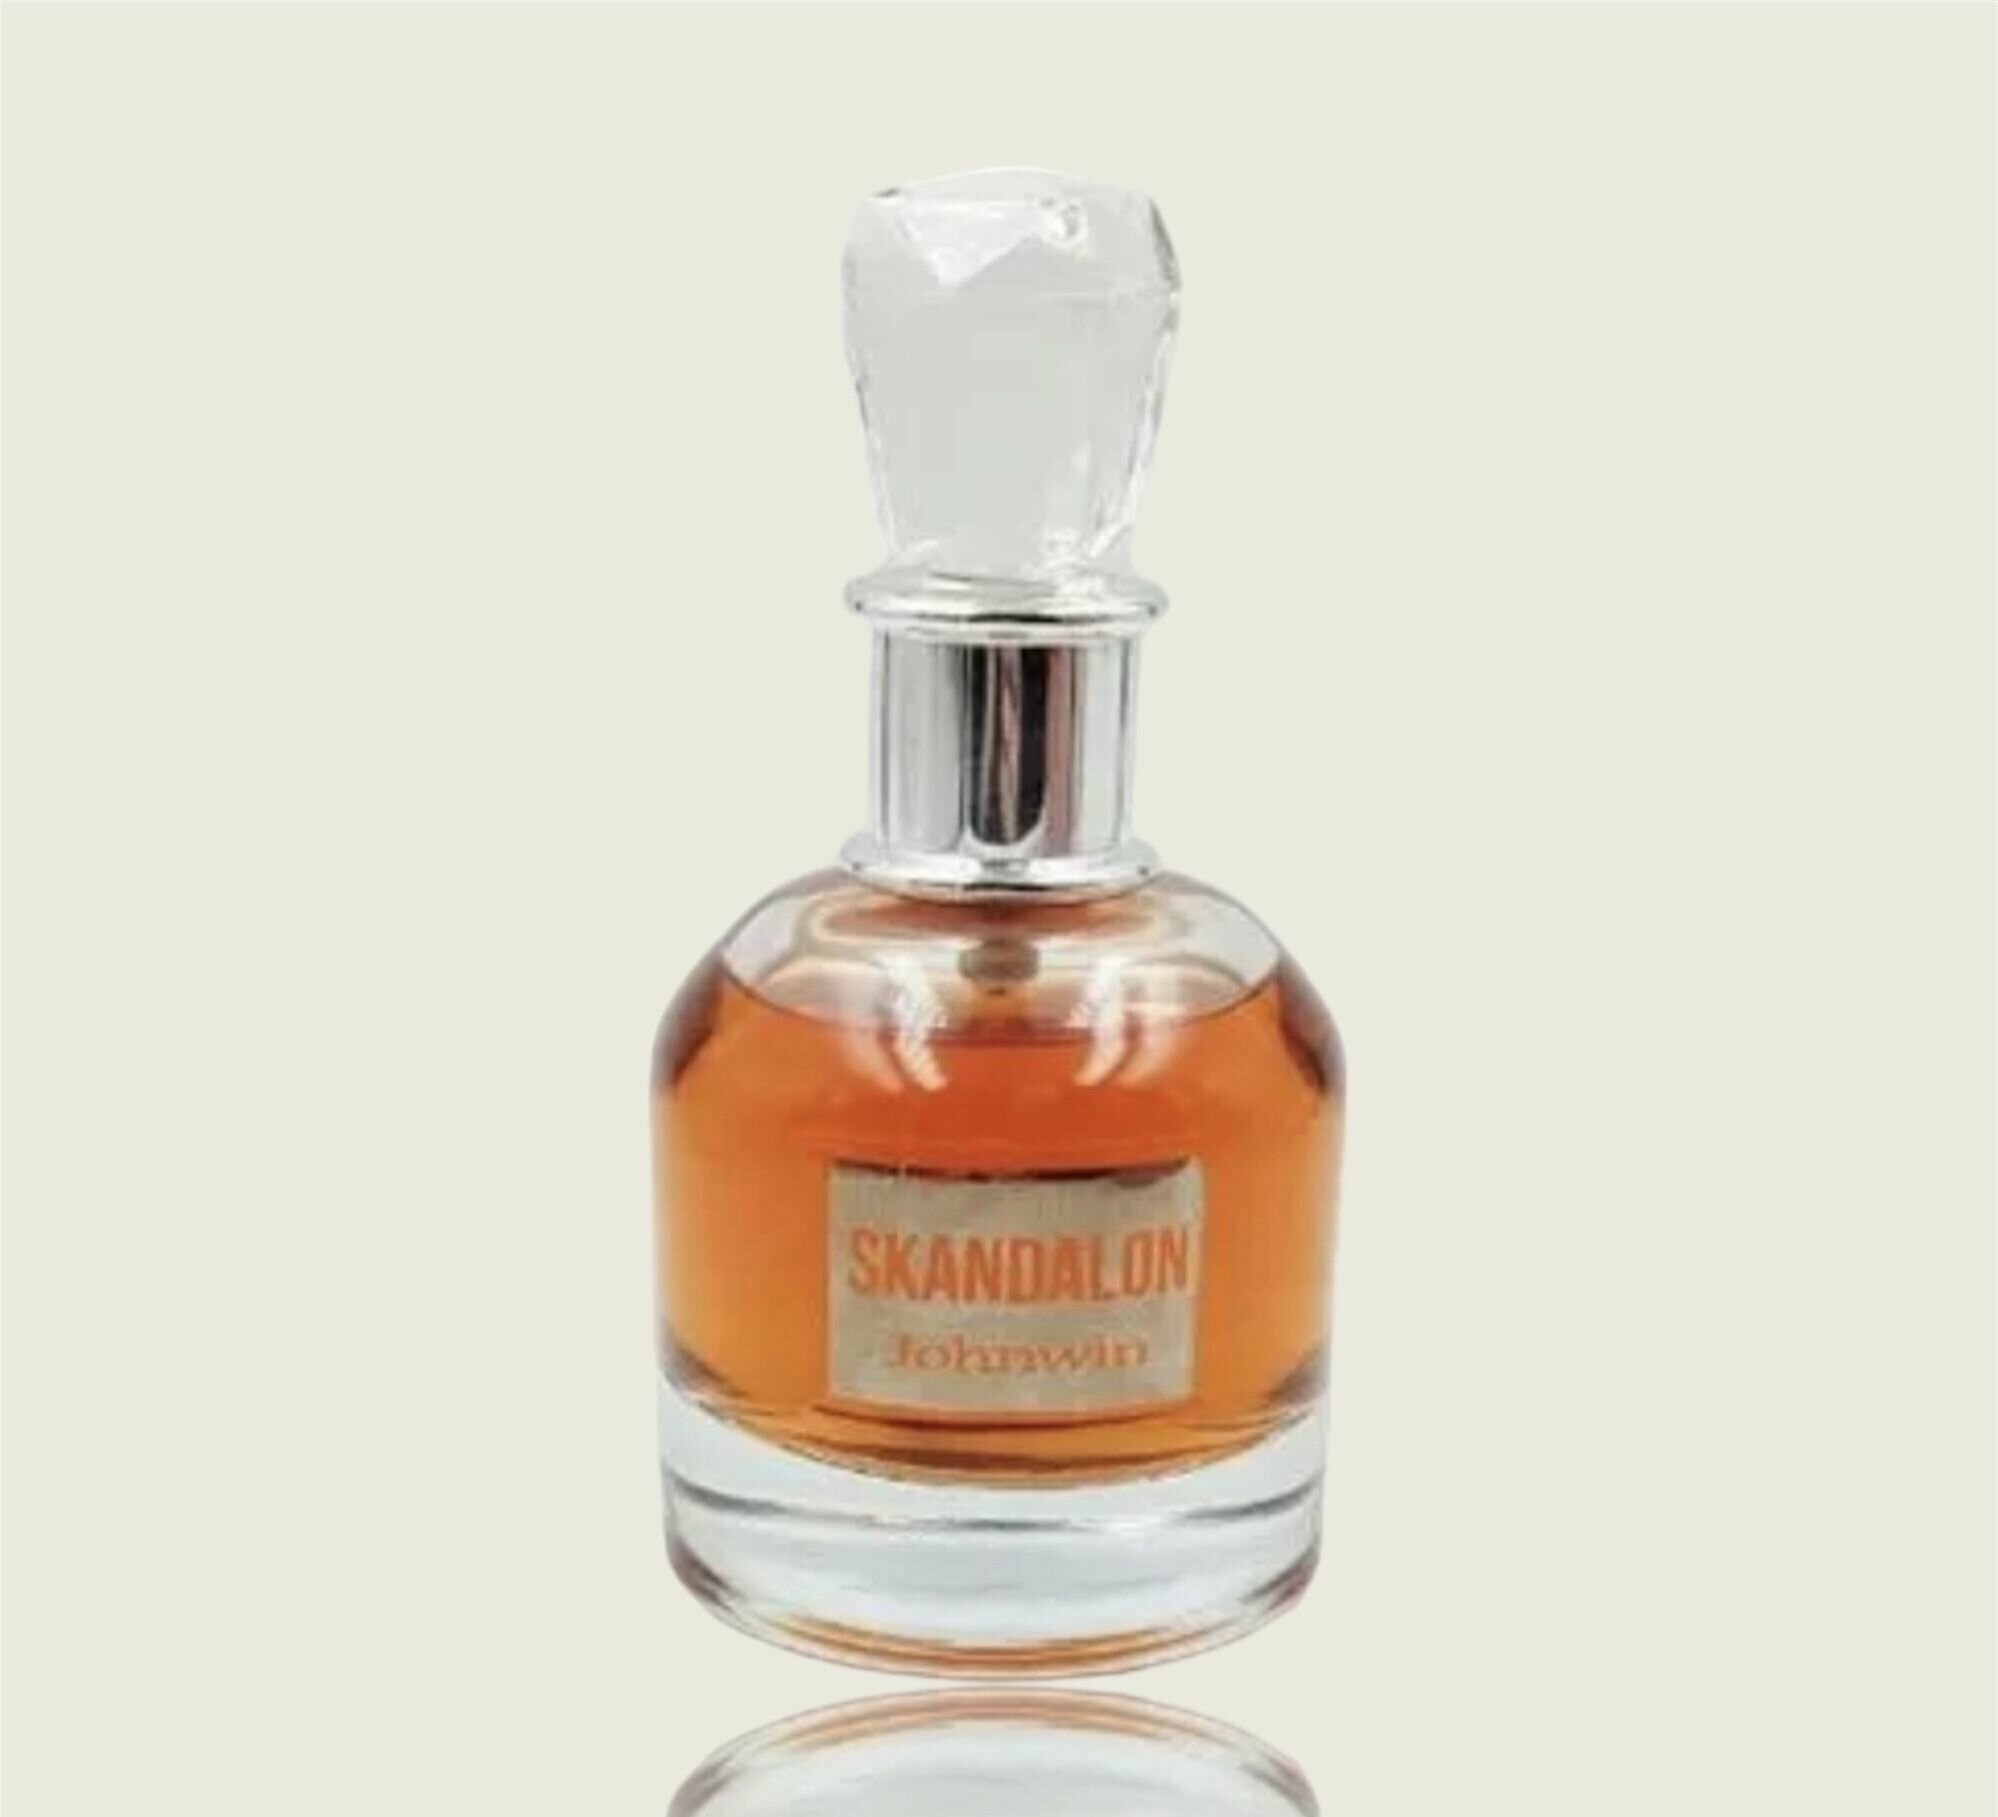 Alhambra Candid парфюмерная вода. Scandal J.P.Gaultier